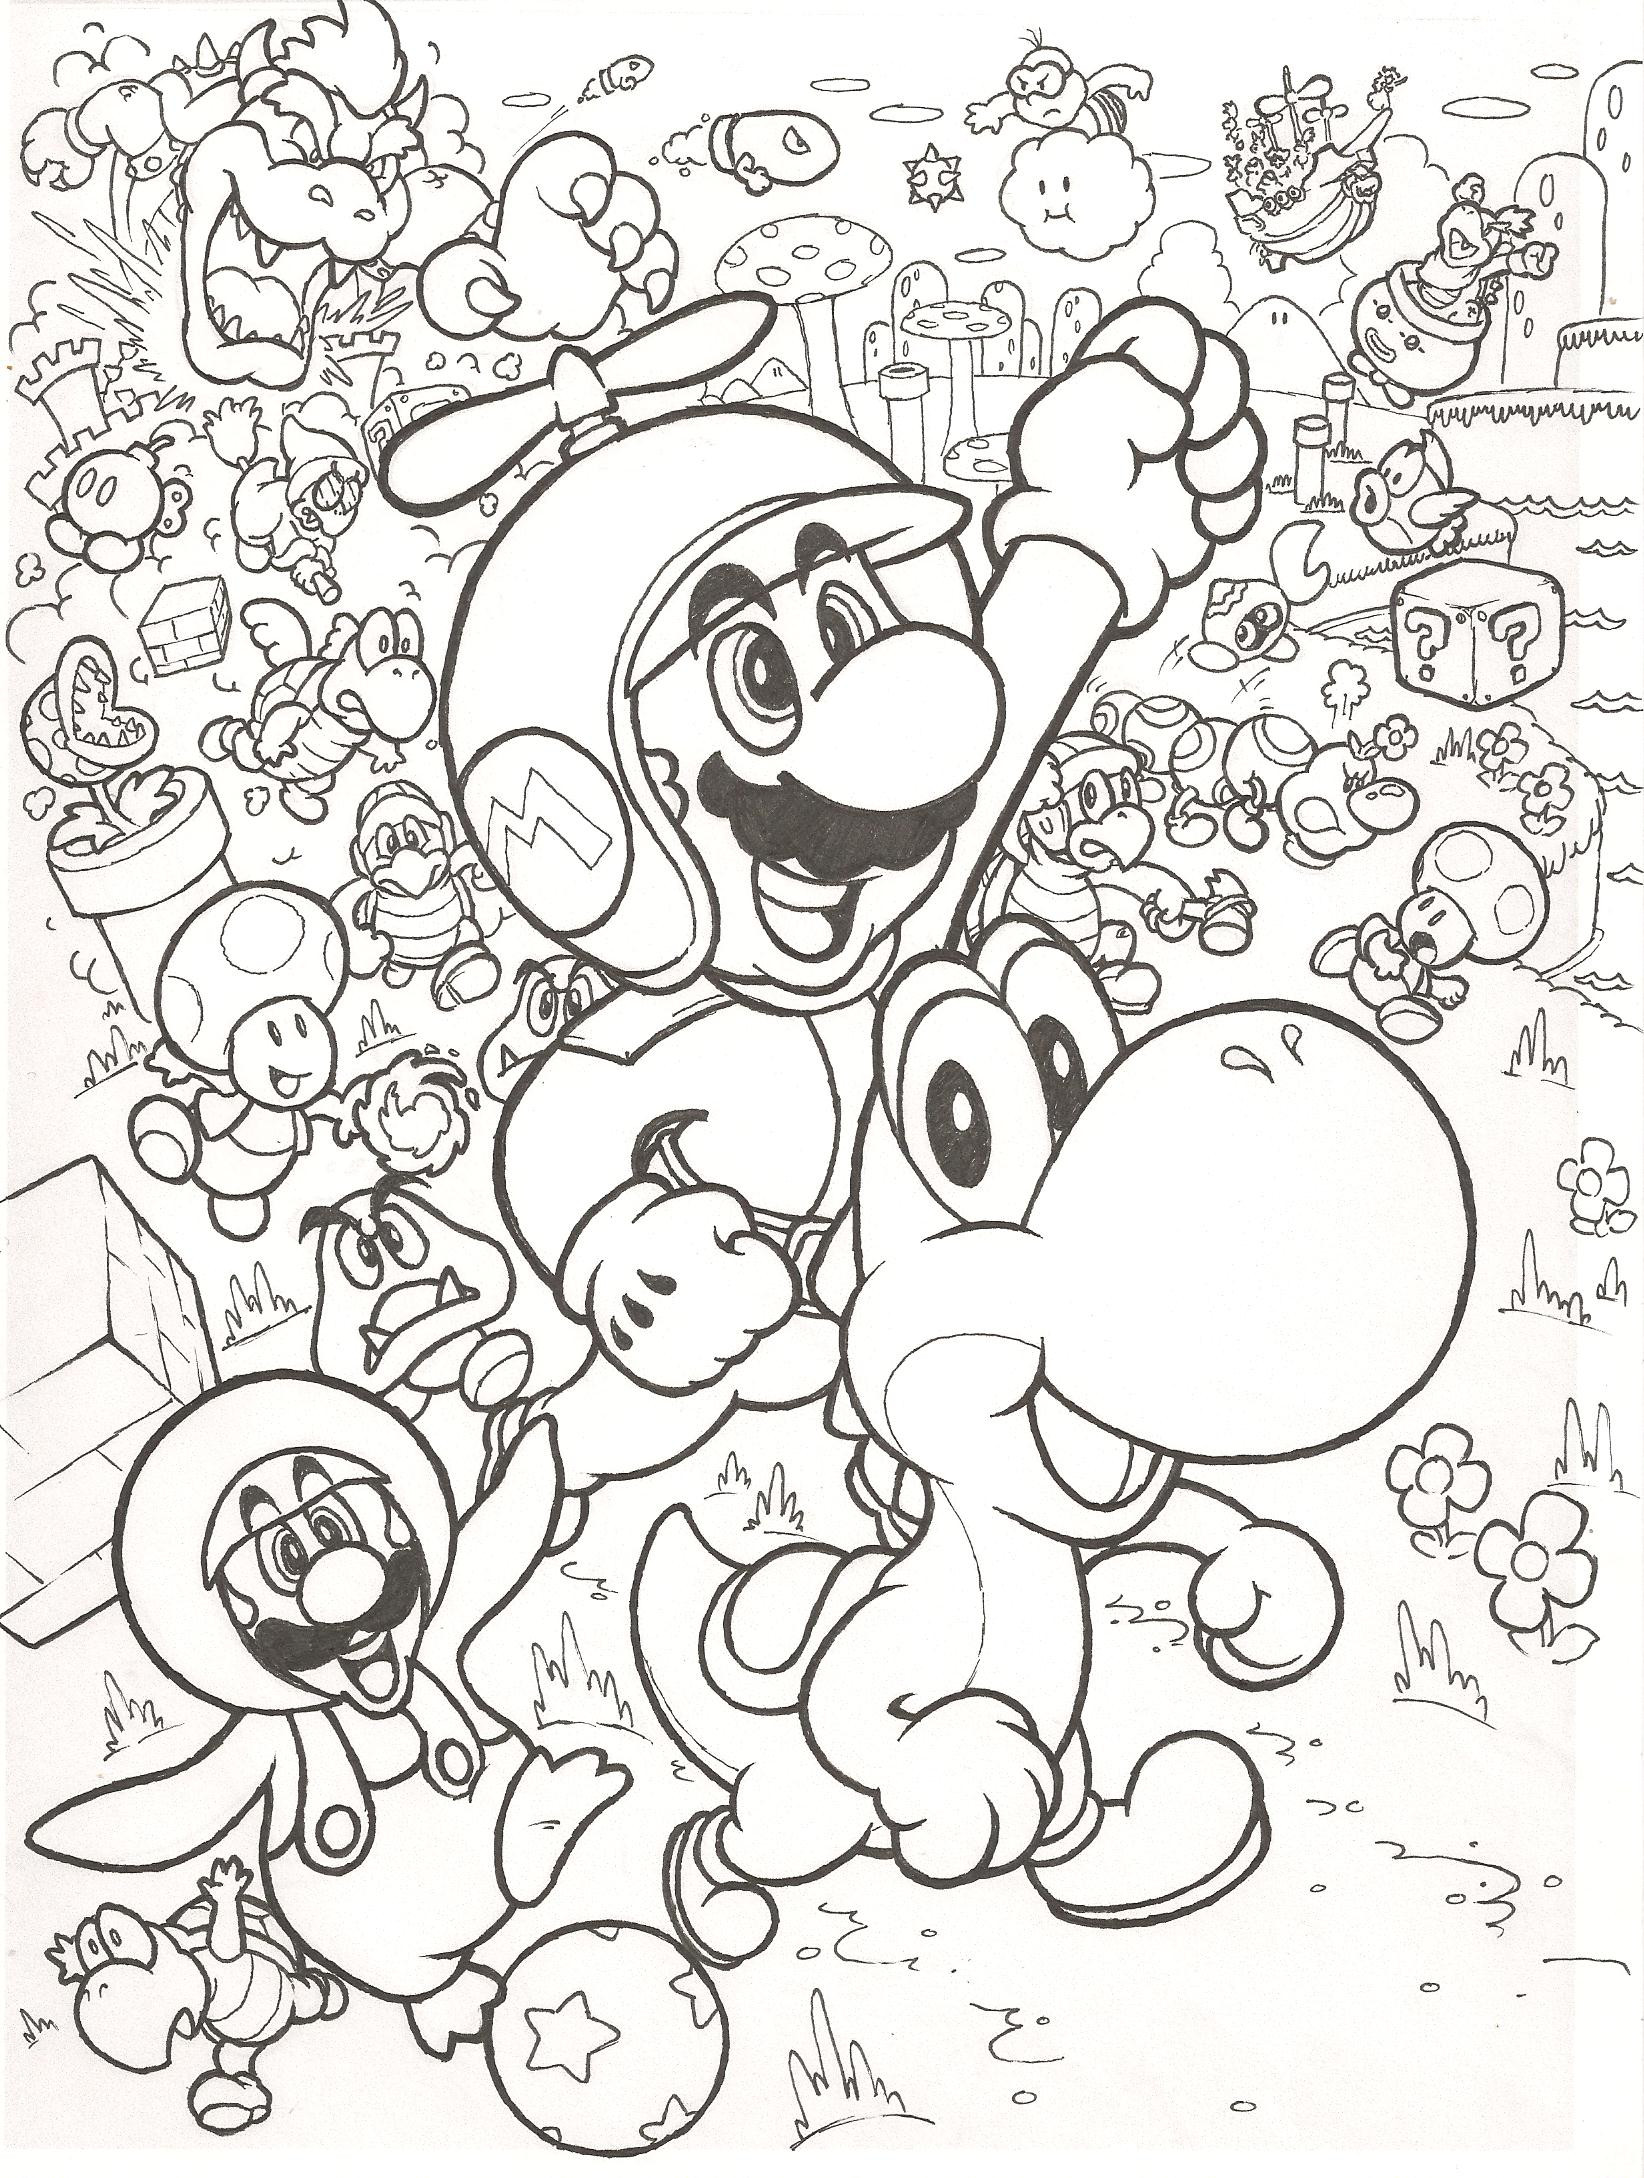 Super Mario Brothers Coloring Pages
 Mario Smash Bros Mario Coloring Pages Coloring Pages